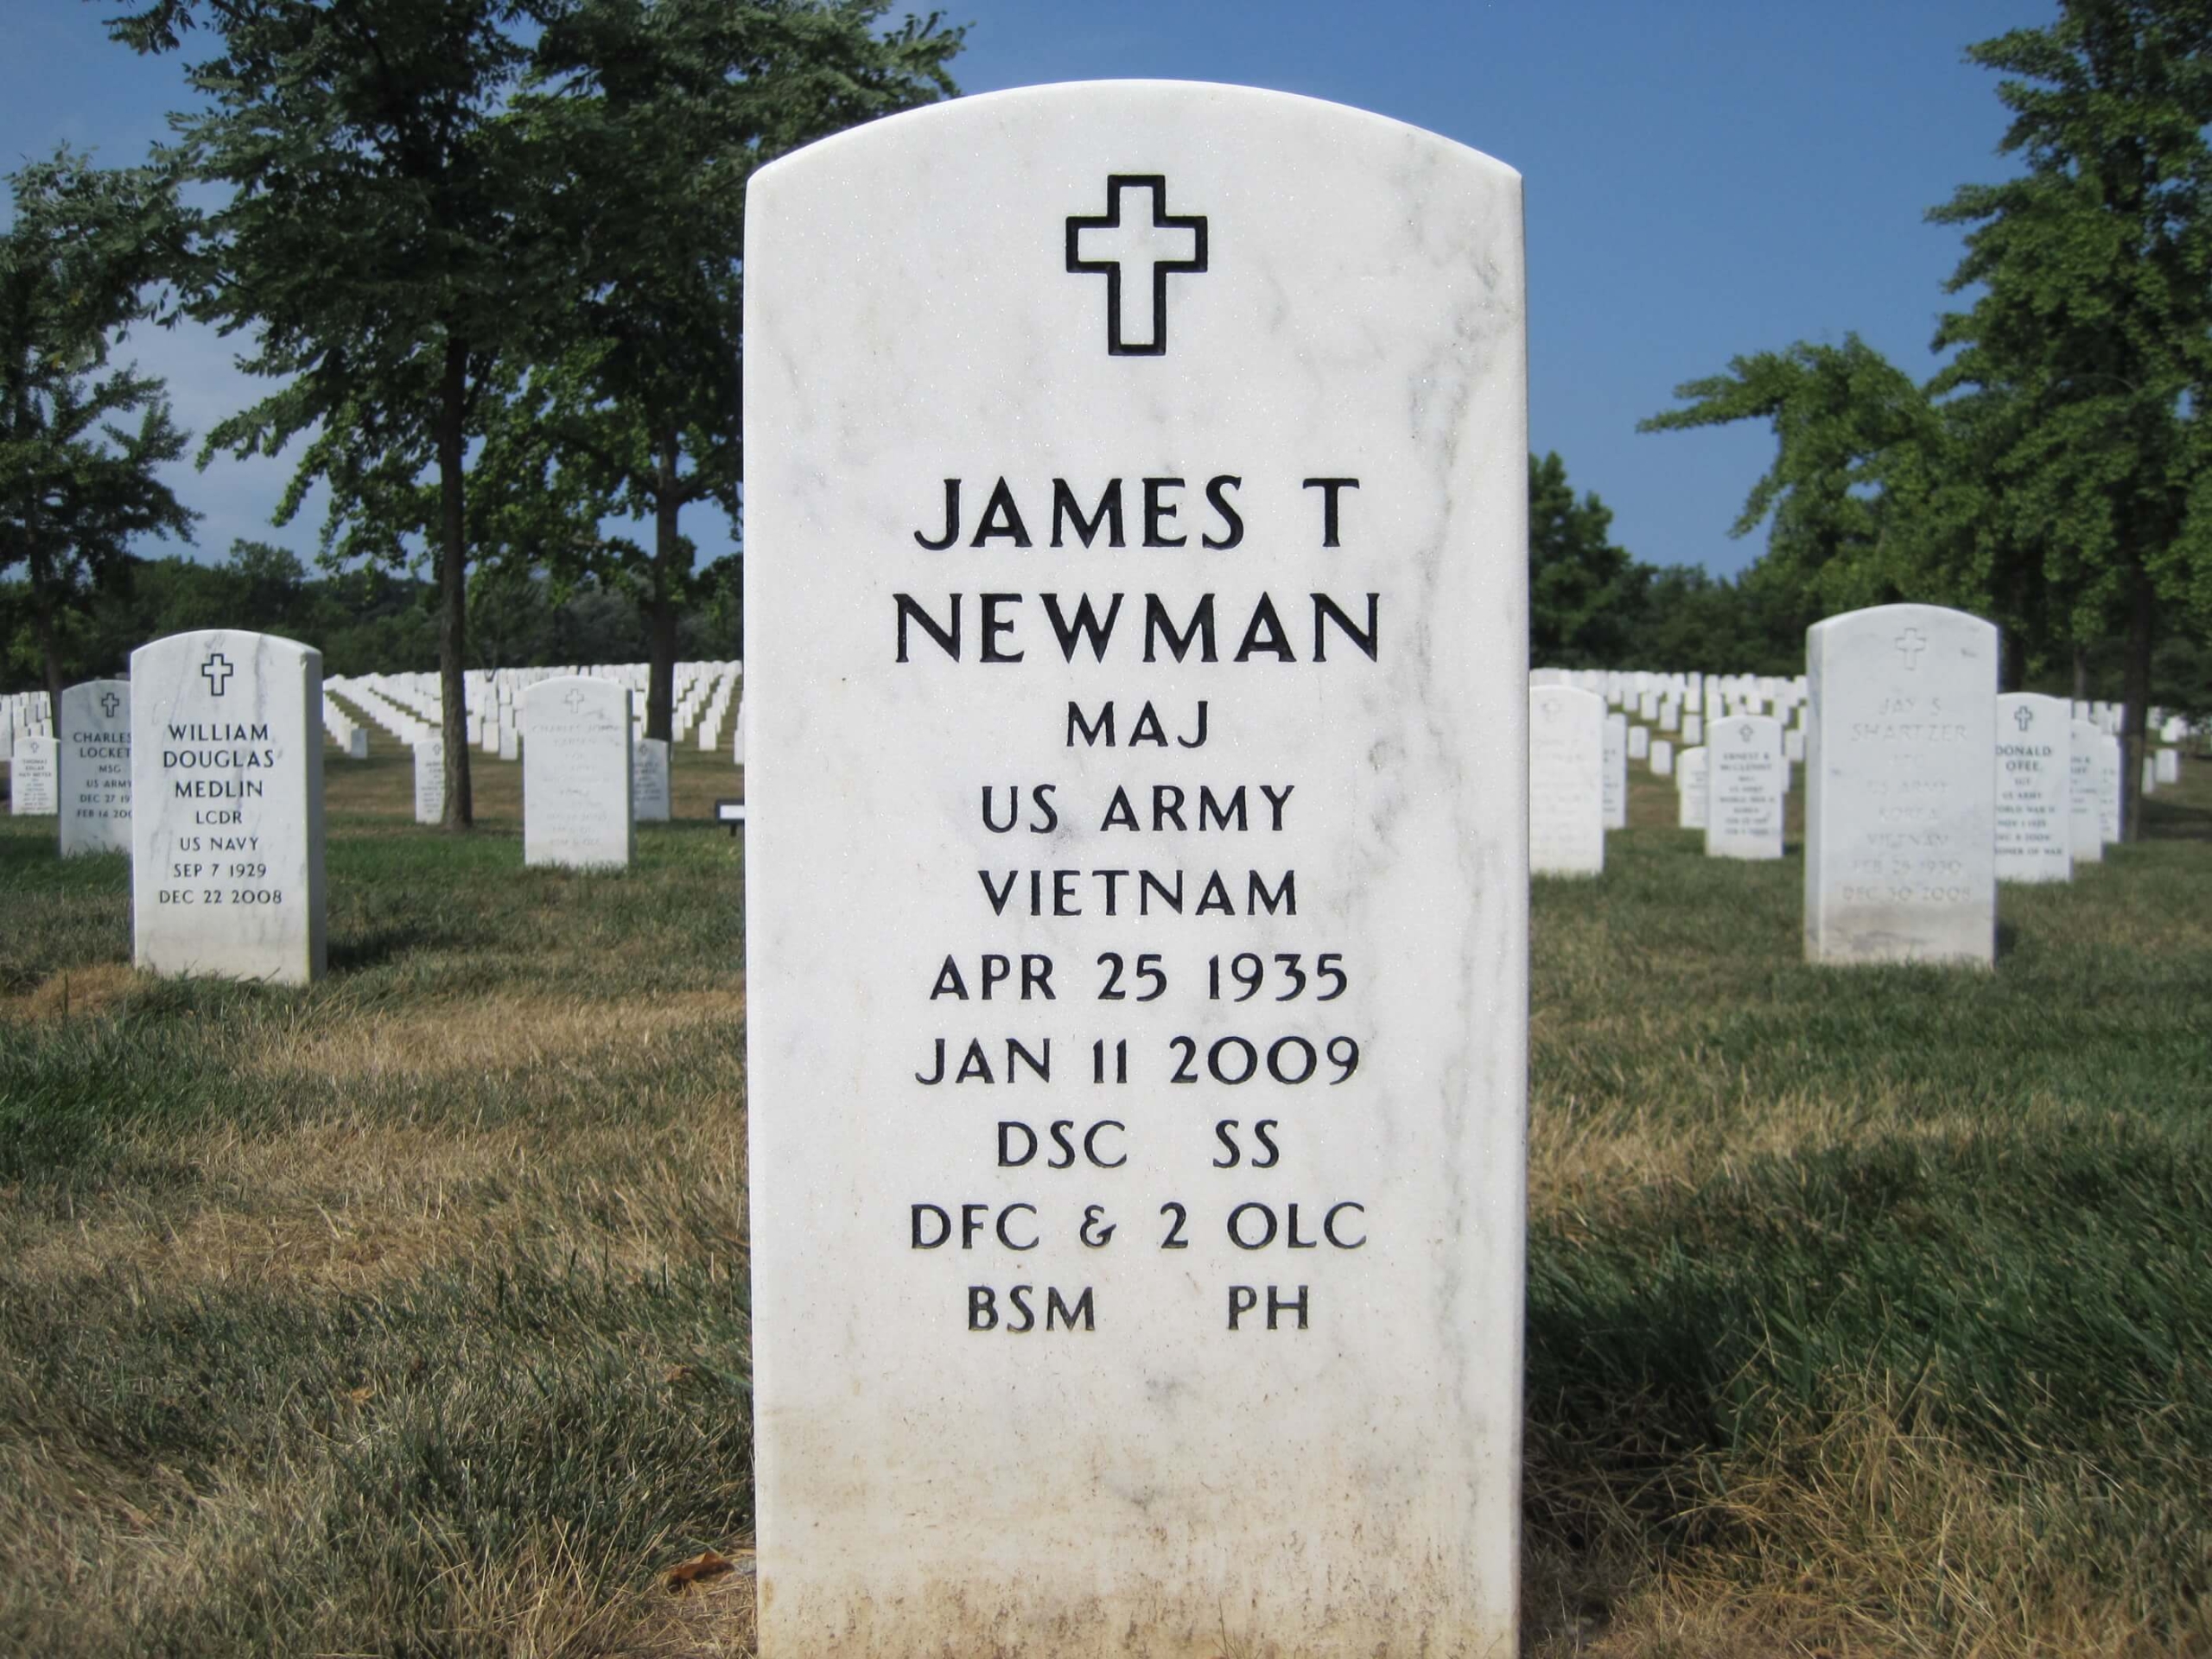 jtnewman-gravesite-photo-by-eileen-horan-july-2011-002